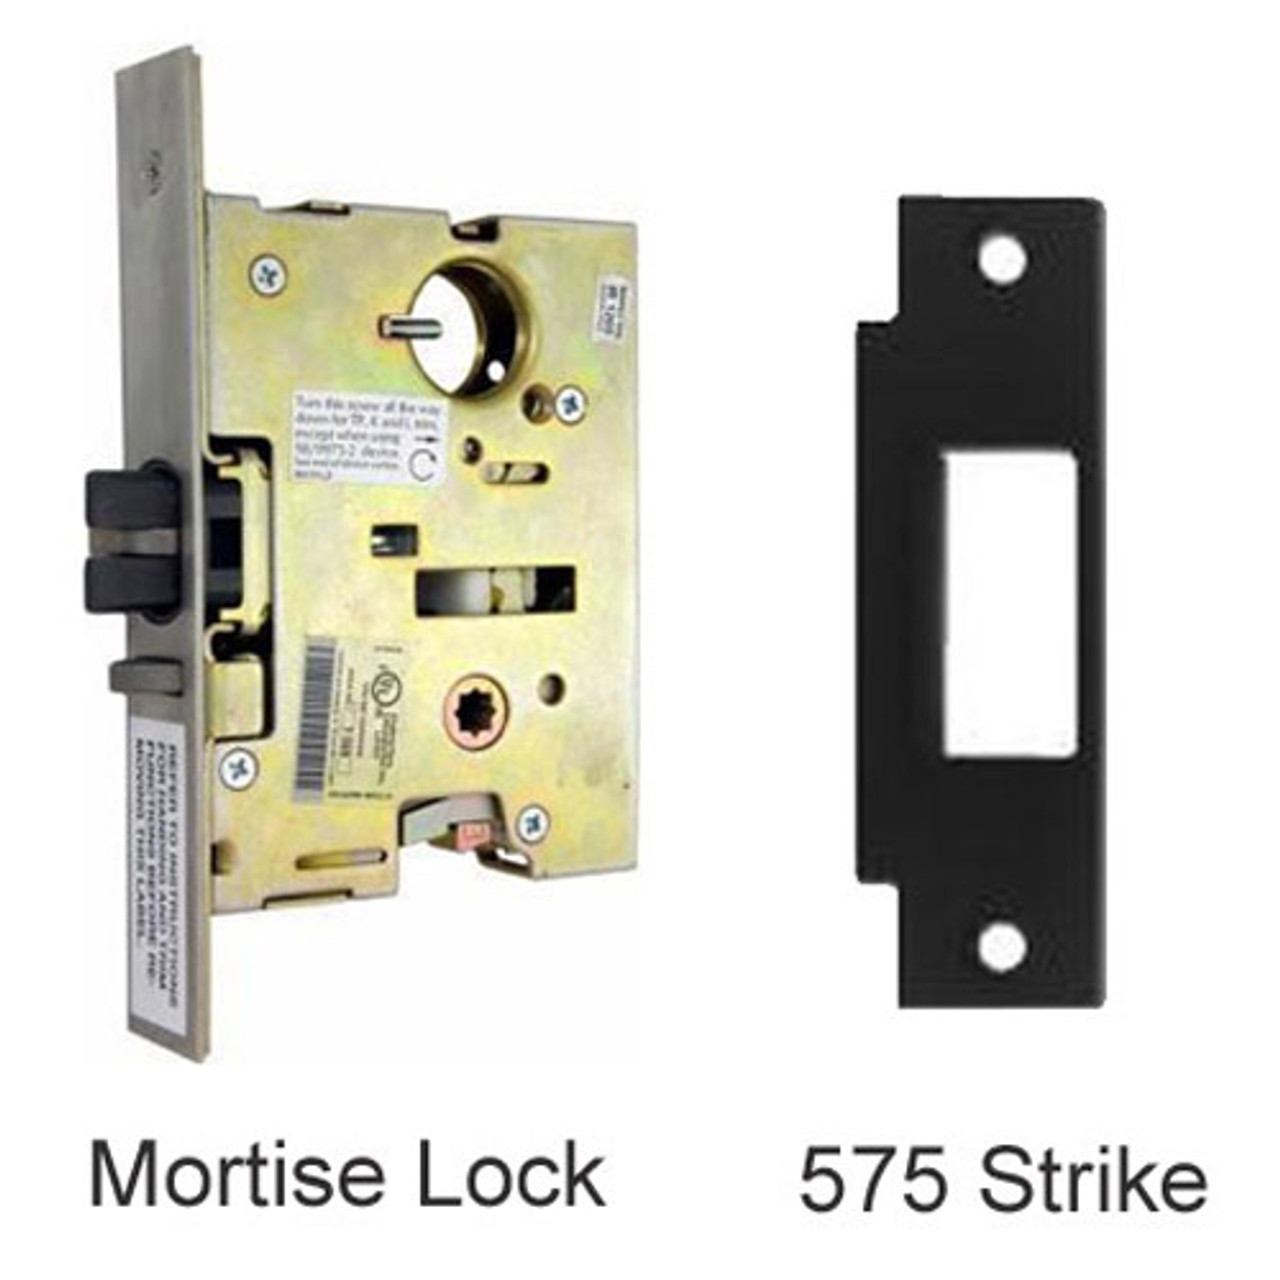 EL9875HL-US3-3 Von Duprin Mortise Lock and Strike